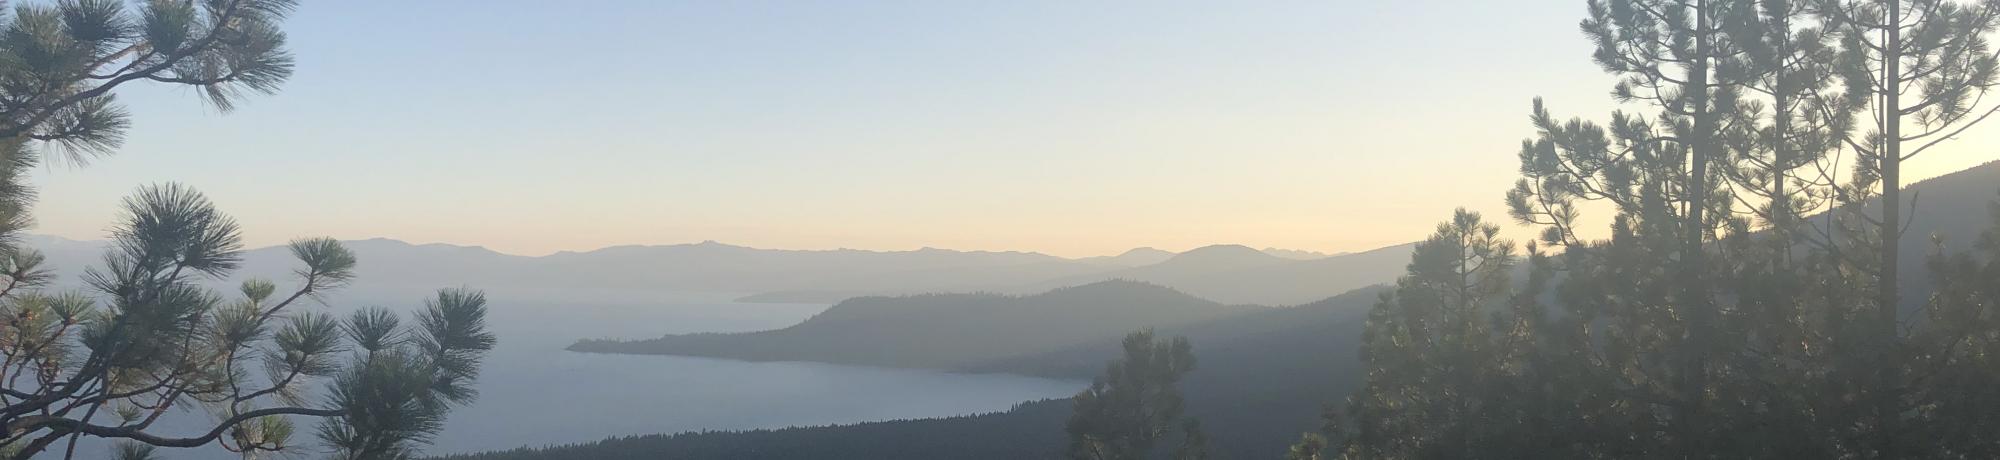 Image of the Lake Tahoe Basin with smoke